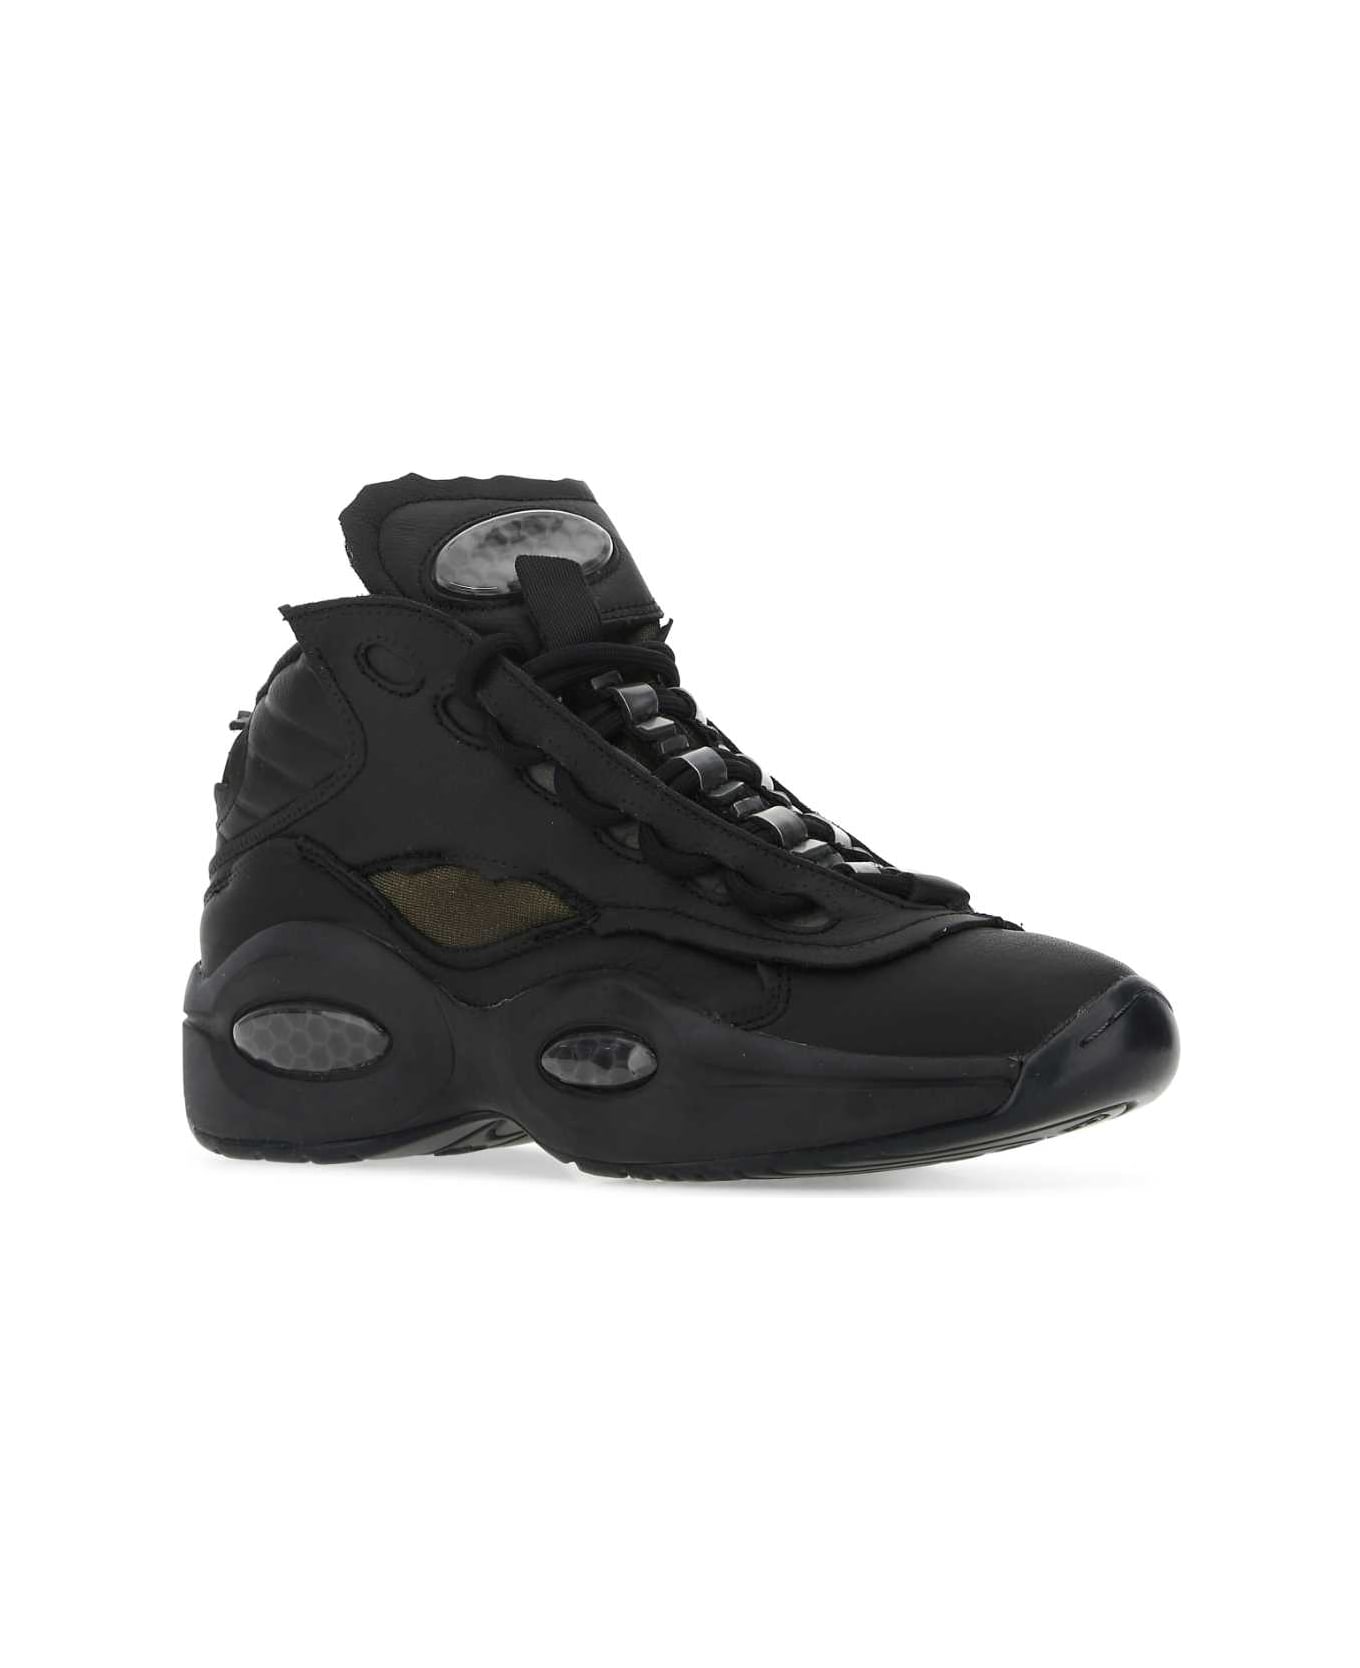 Reebok Black Leather Project 0 Tq Memory Of Sneakers - BLACKFTWWHTBLACK